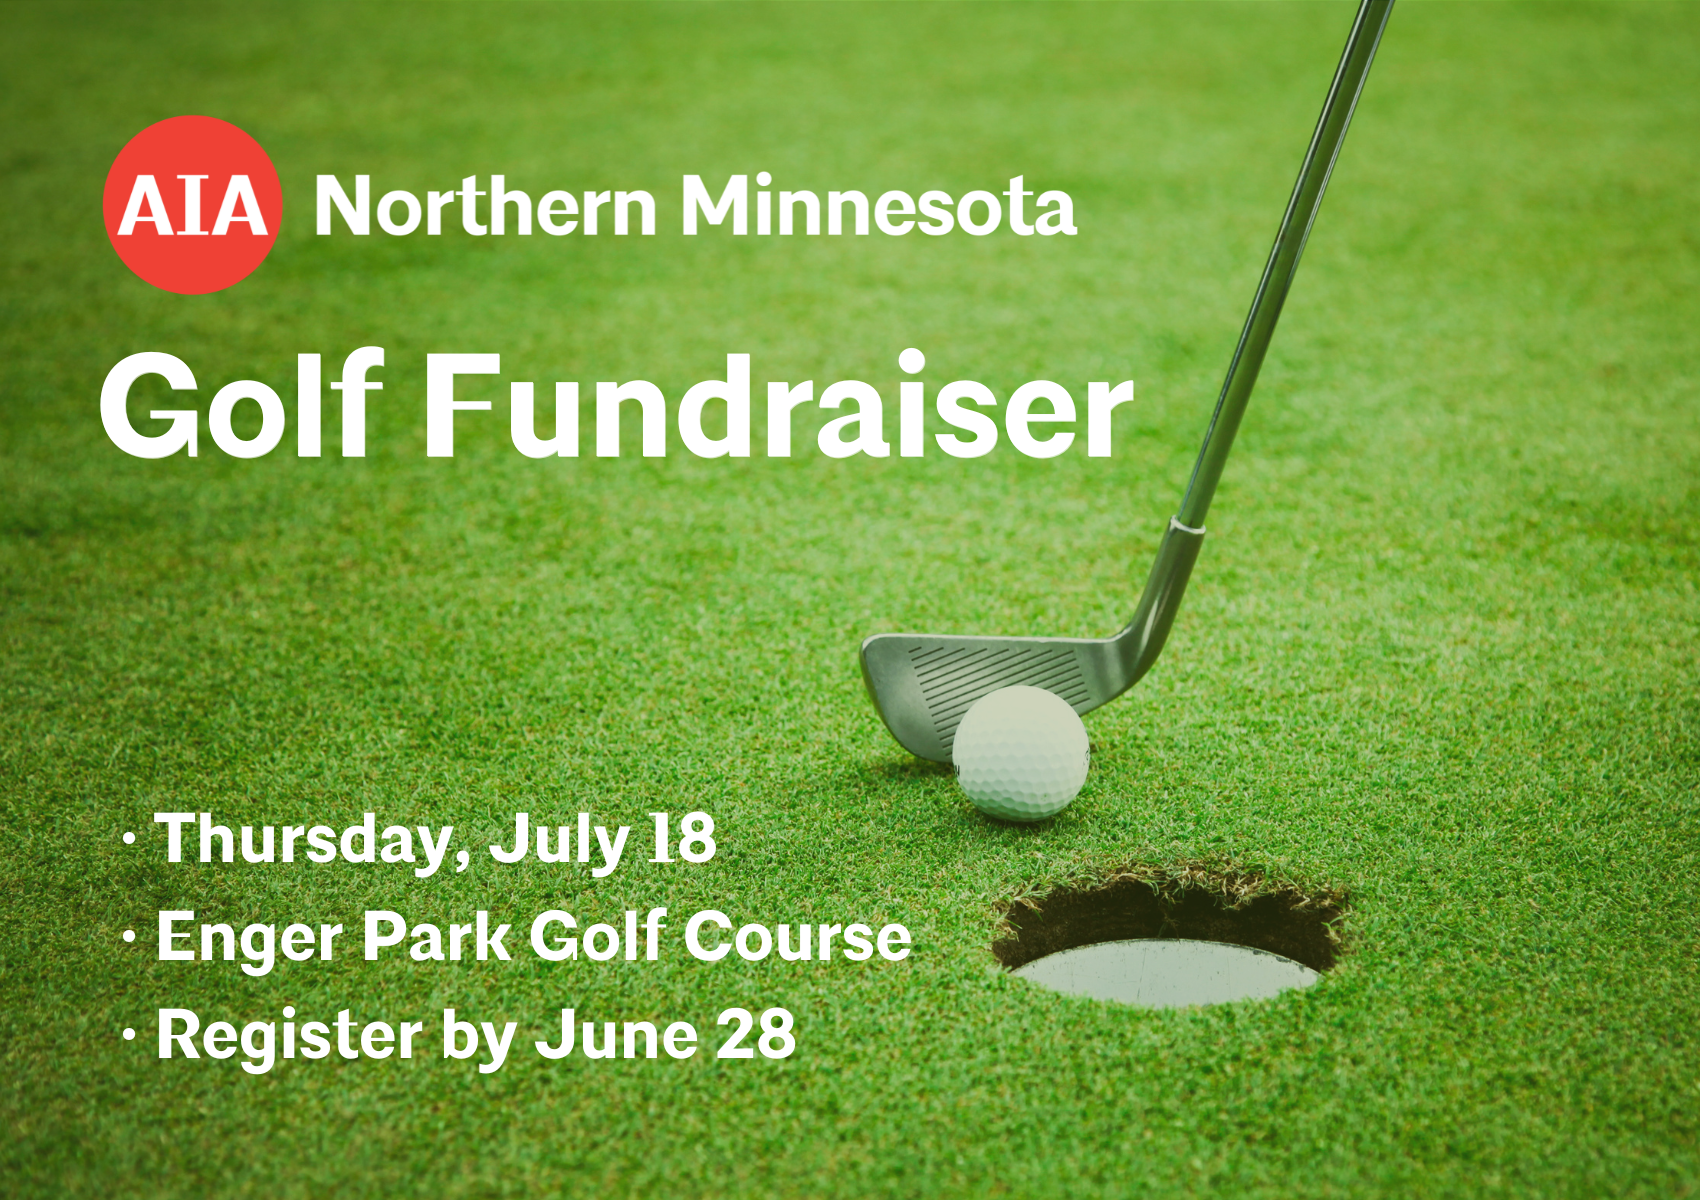 AIA Northern Minnesota Golf Fundraiser